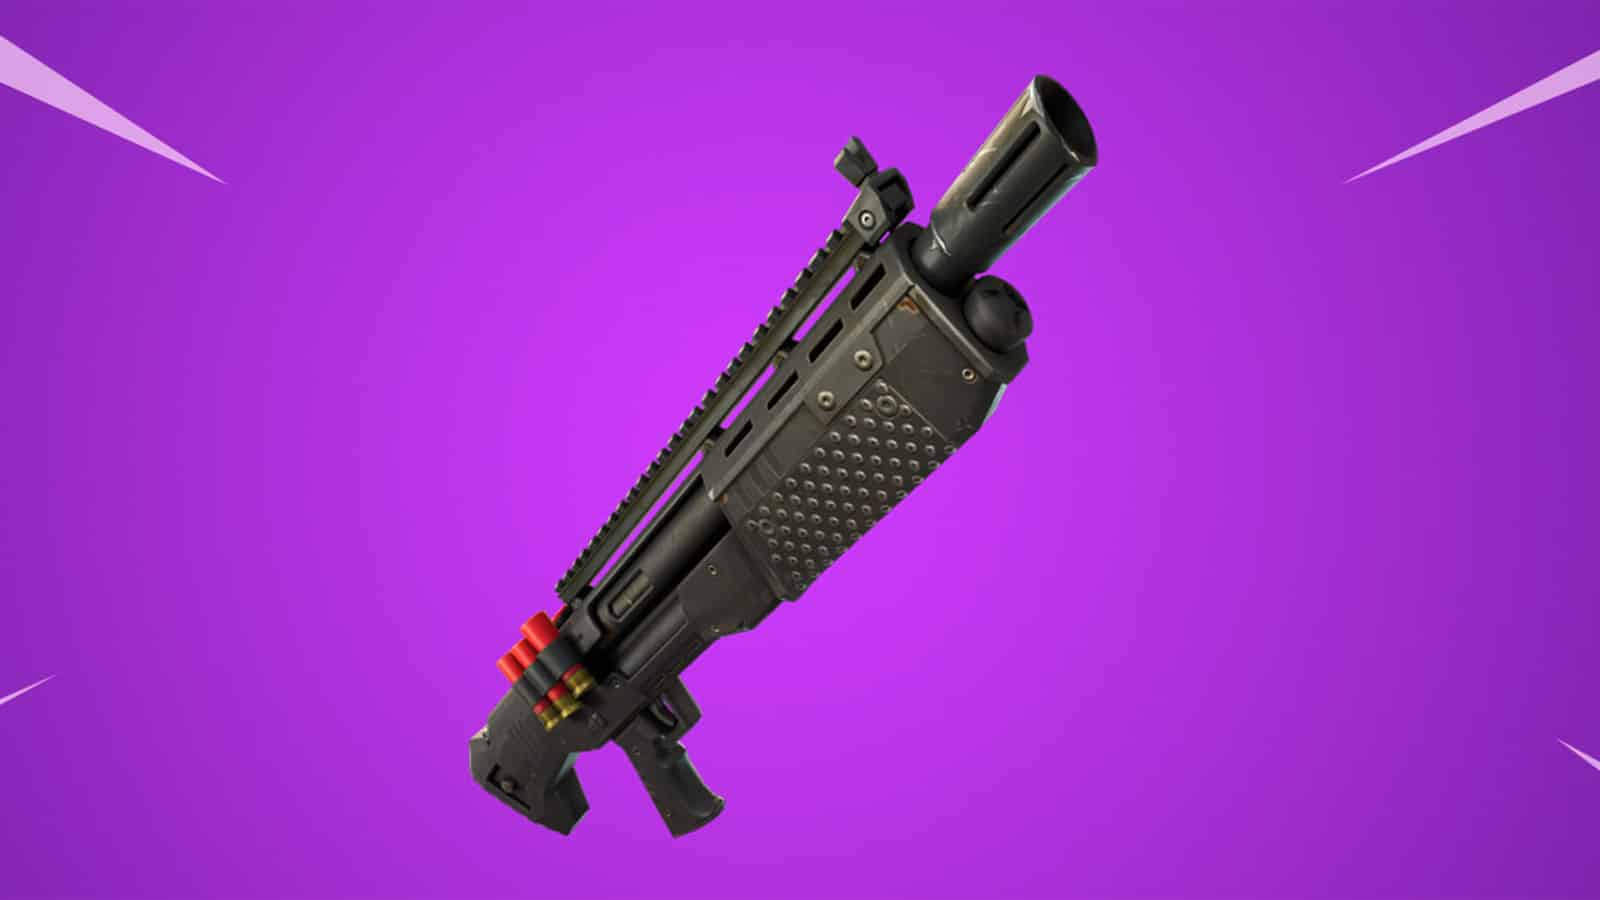 The Heavy Shotgun in Fortnite 19.20 update